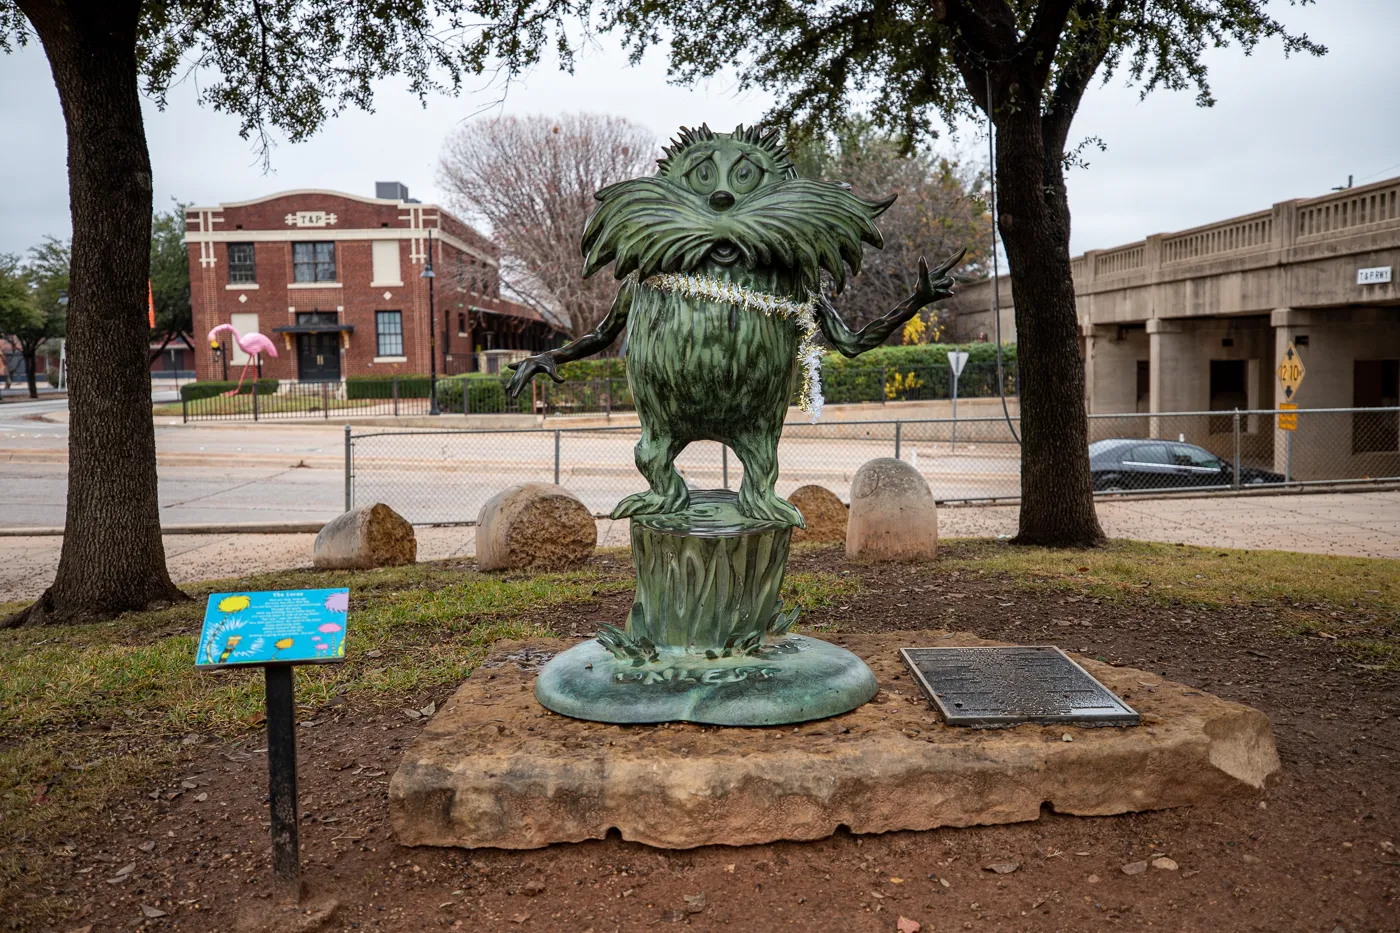 The Lorax statue at Dr. Seuss Park in Abilene, Texas (Everman Park)